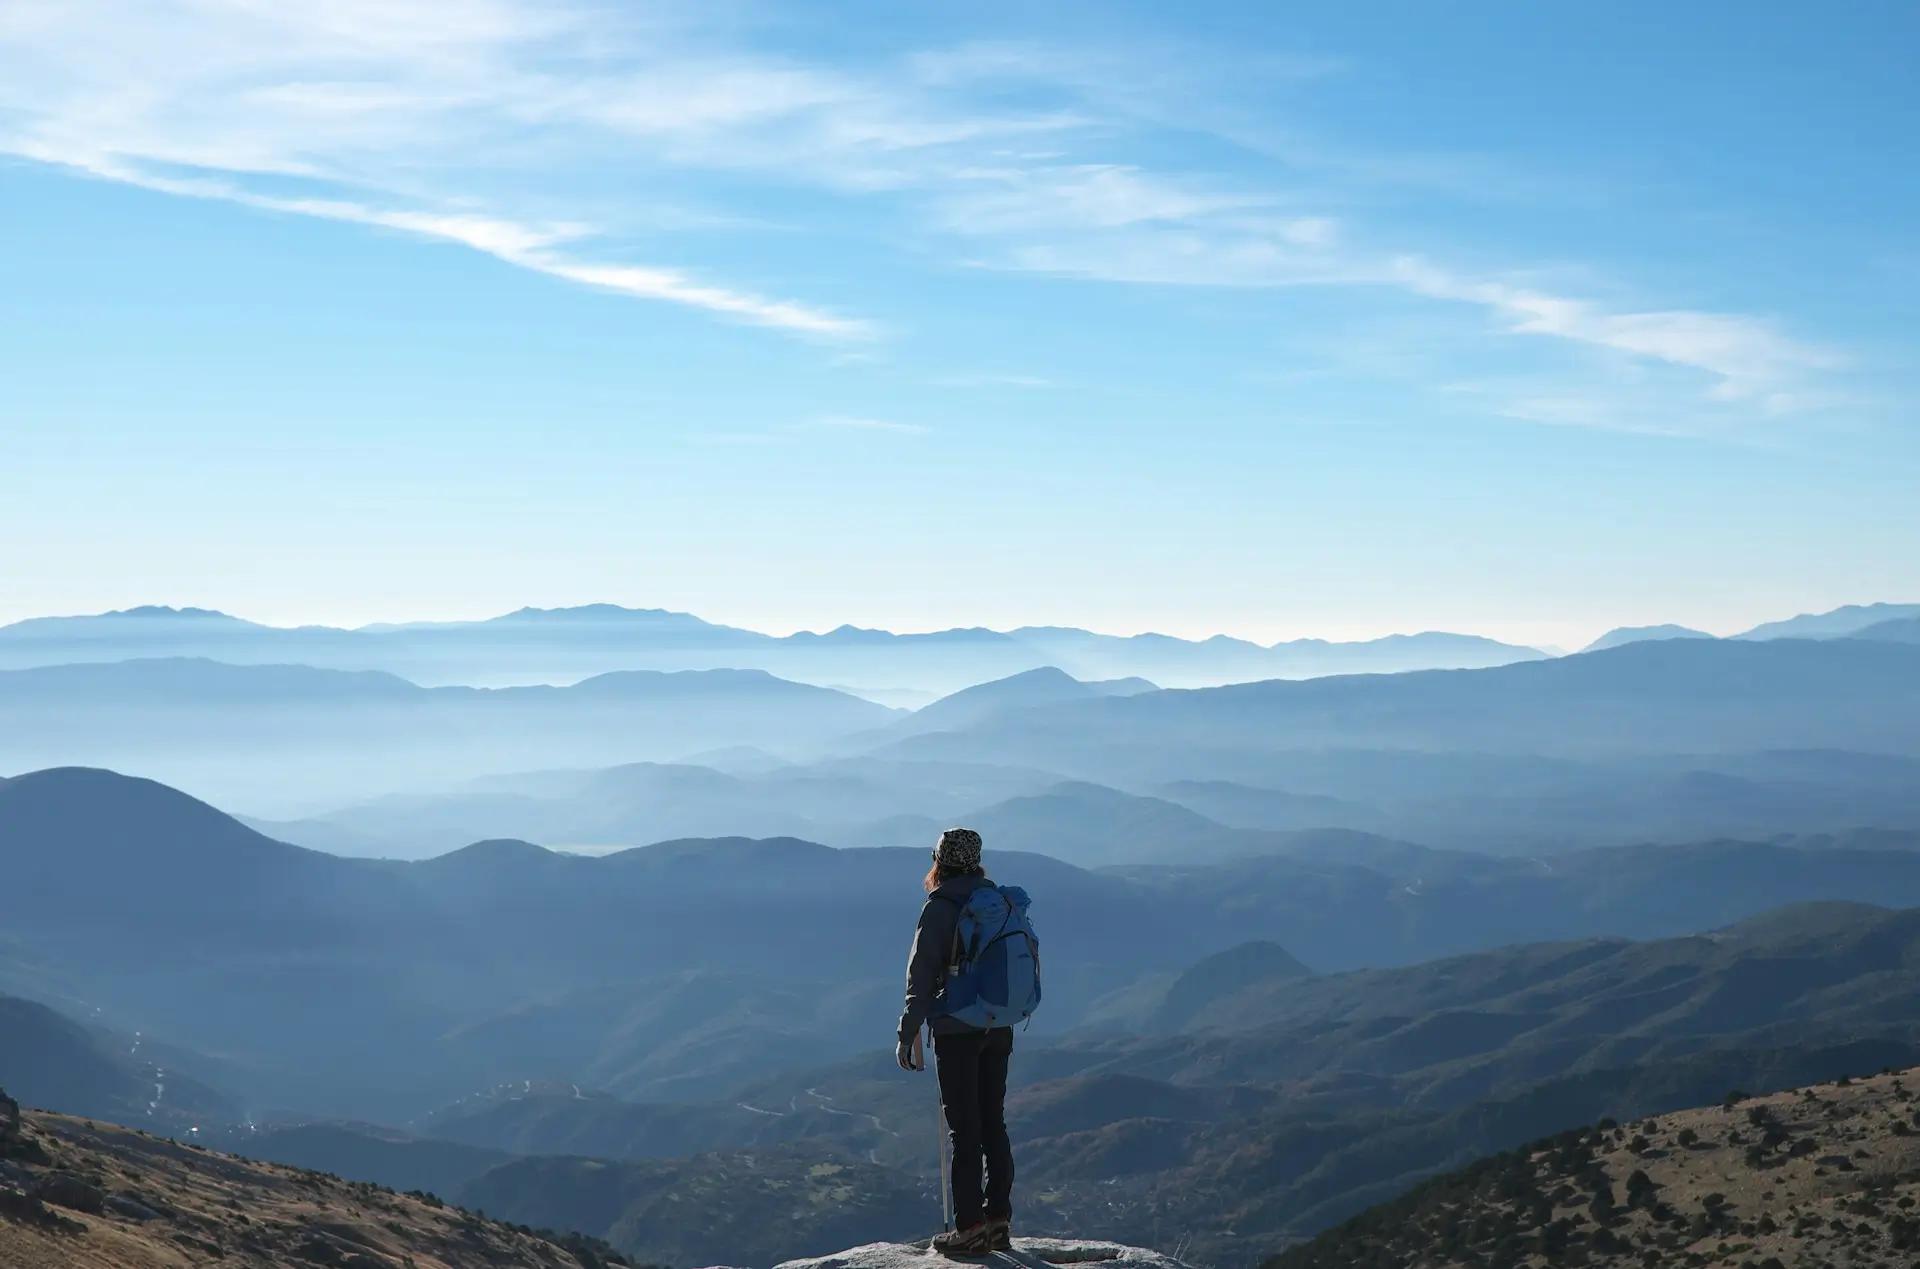 A hiker looking across a mountain range vista